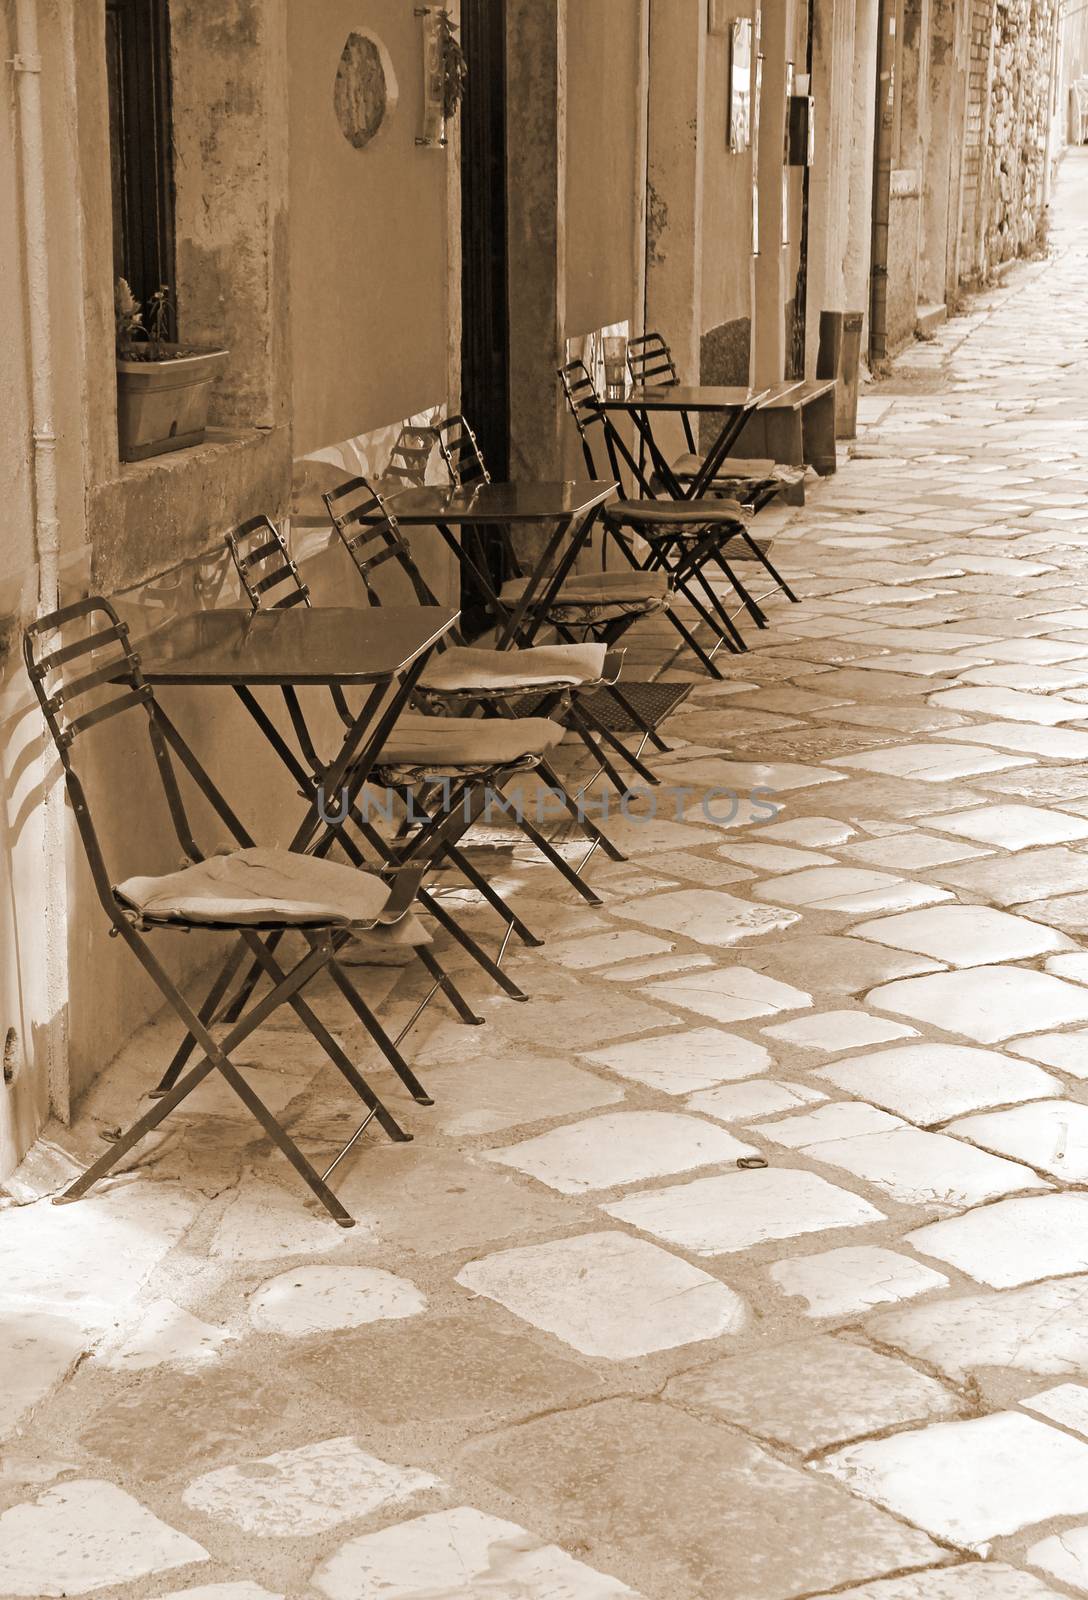 Greece. Corfu island. Corfu town. An open-air cafe. In Sepia ton by oxanatravel